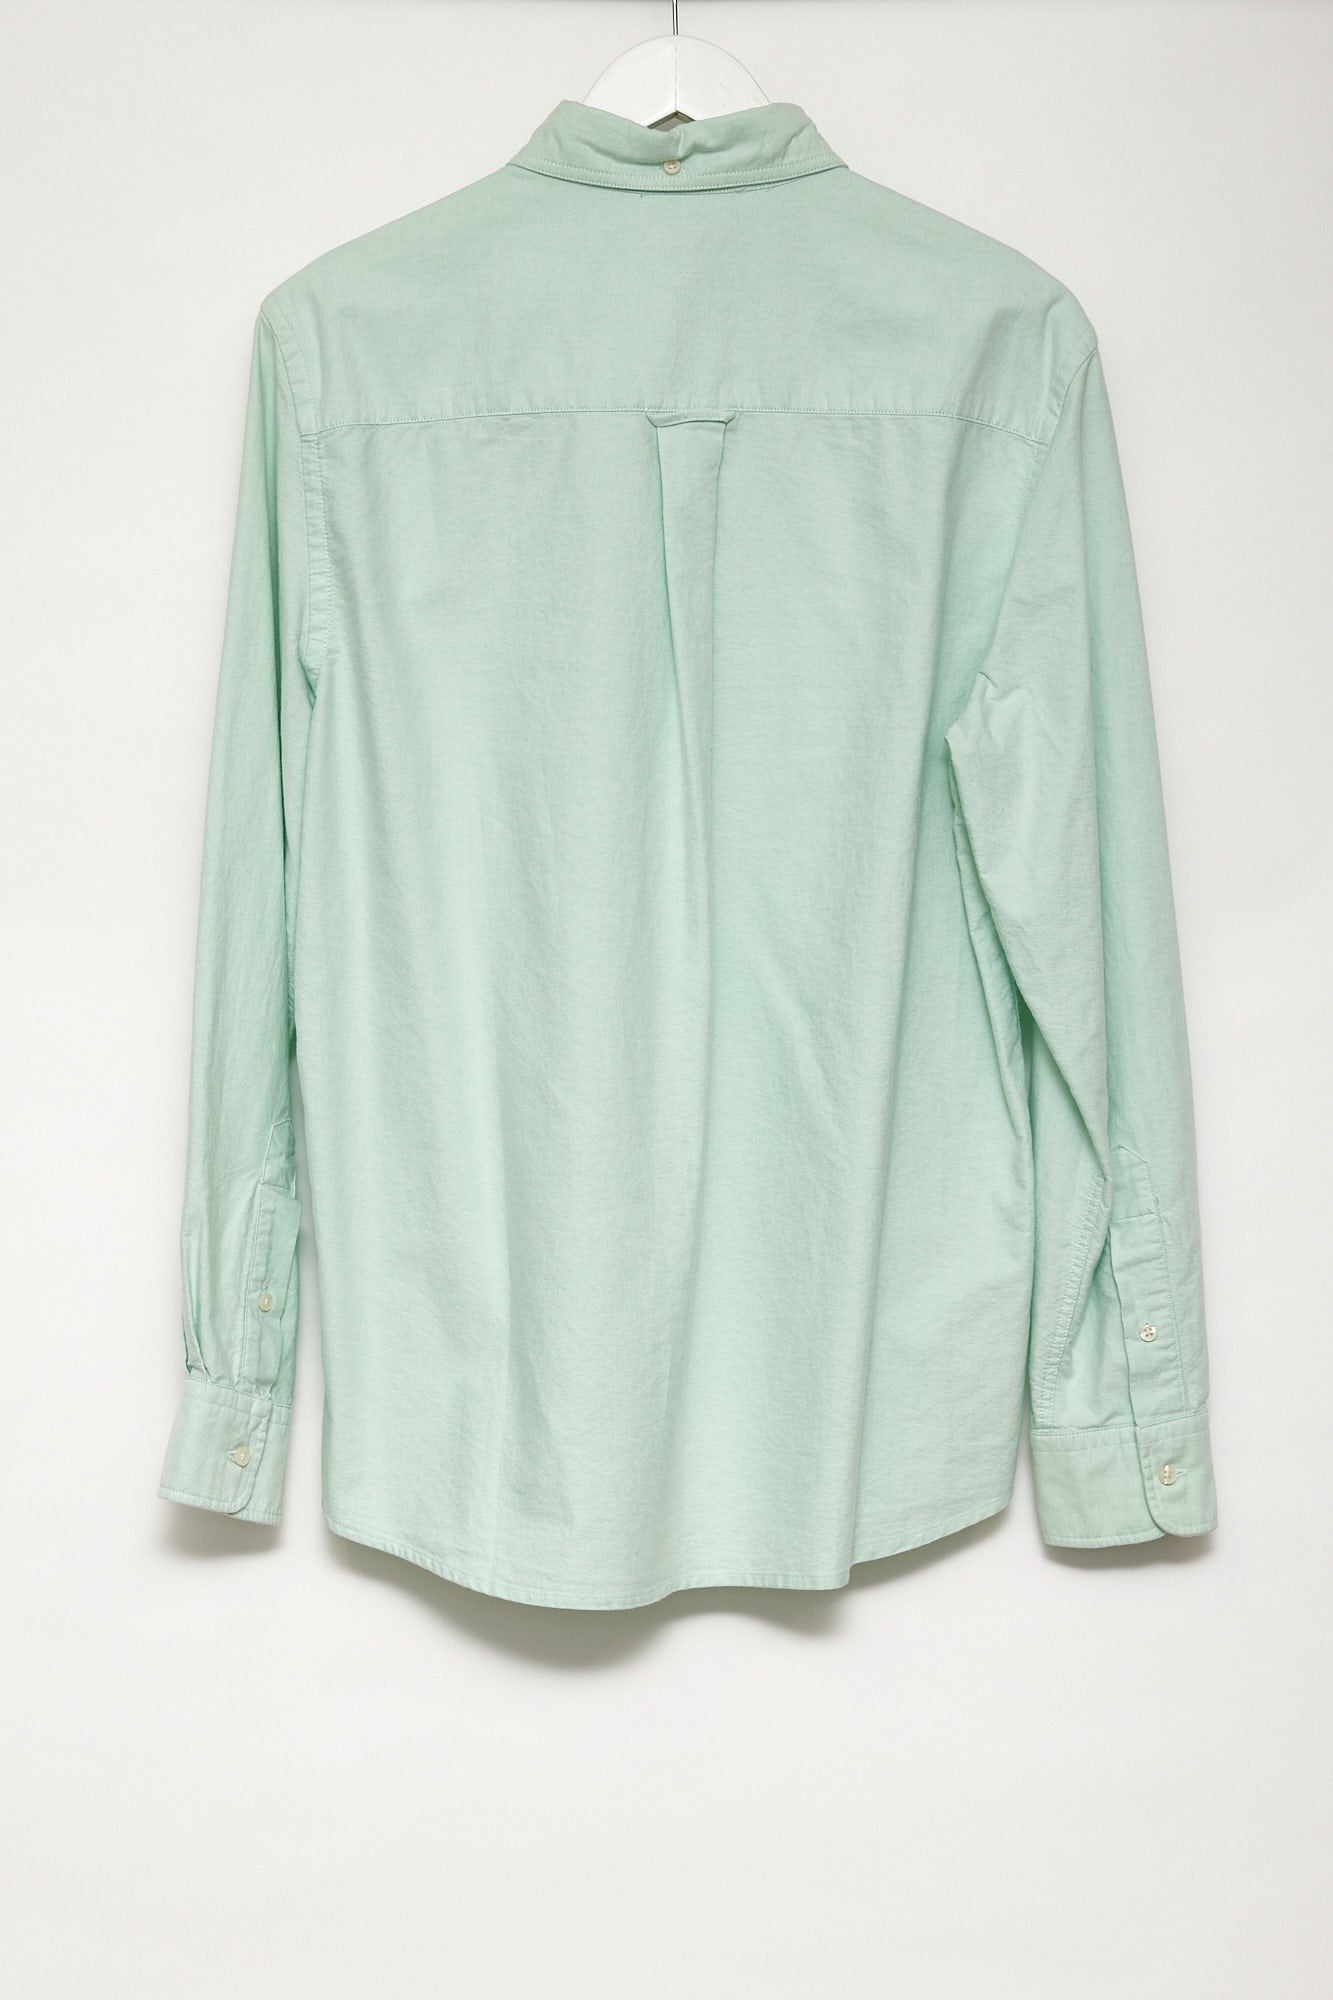 Mens Zara Light green Oxford shirt size medium